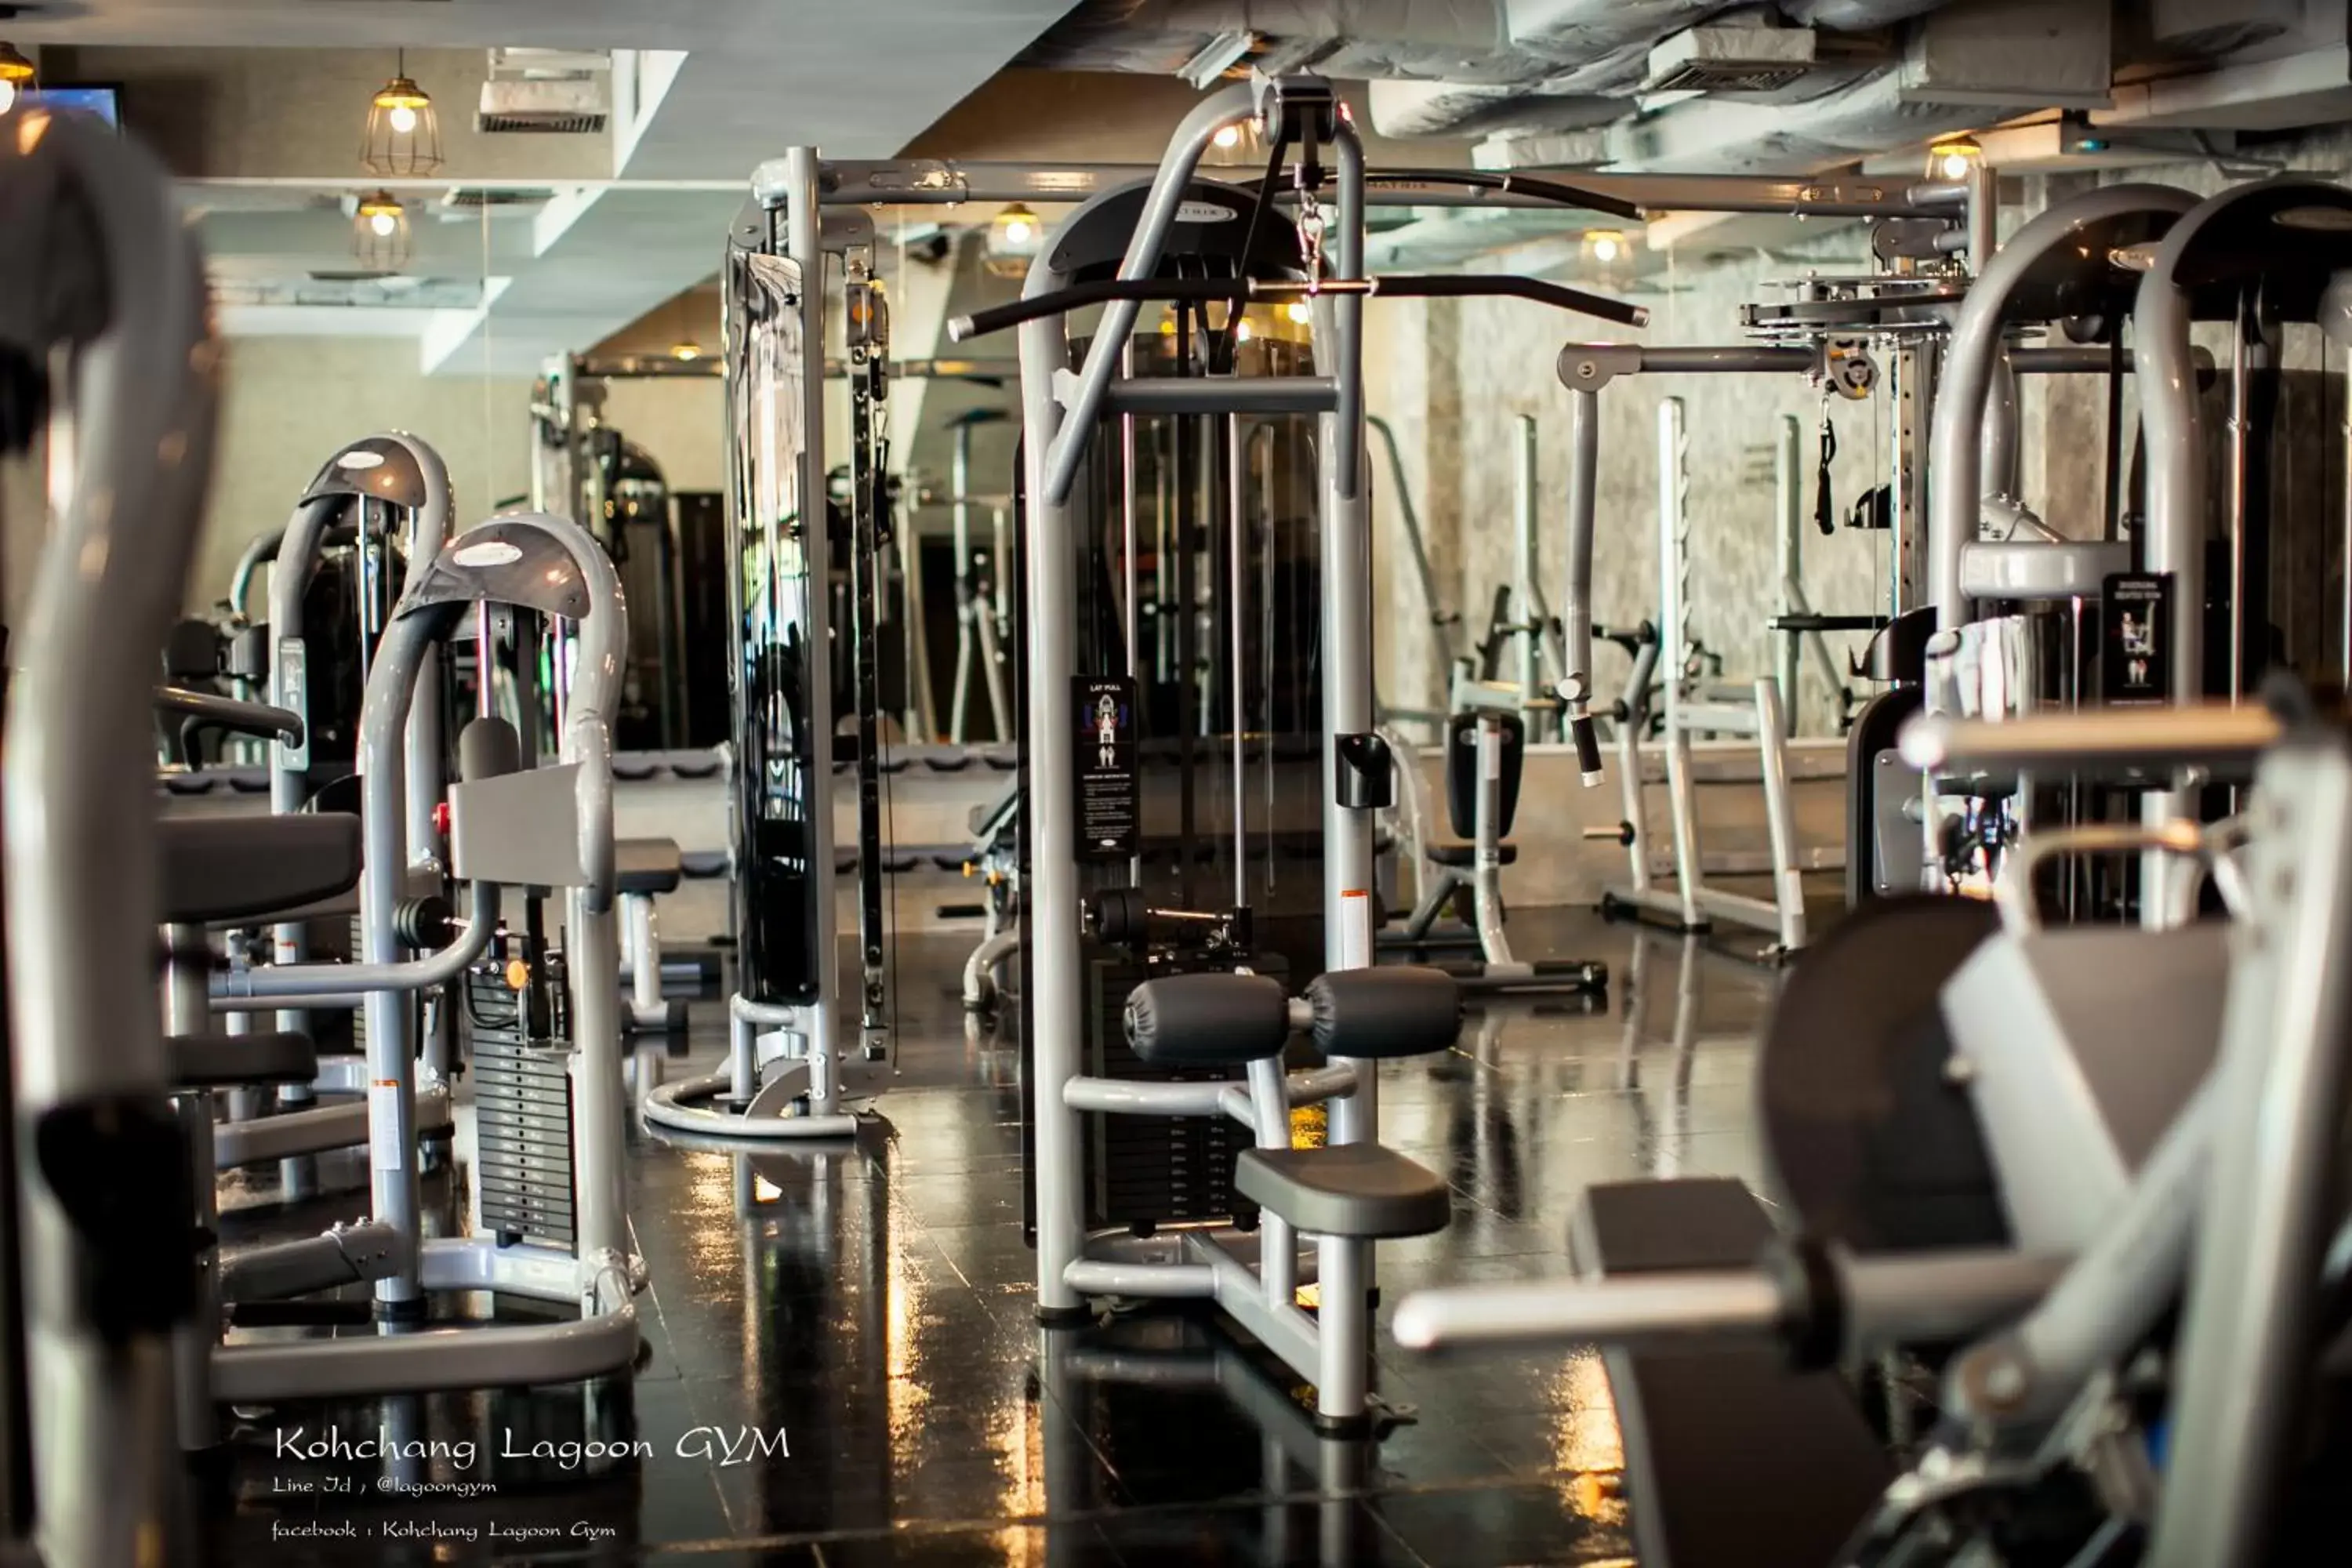 Fitness centre/facilities in Koh Chang Lagoon Princess